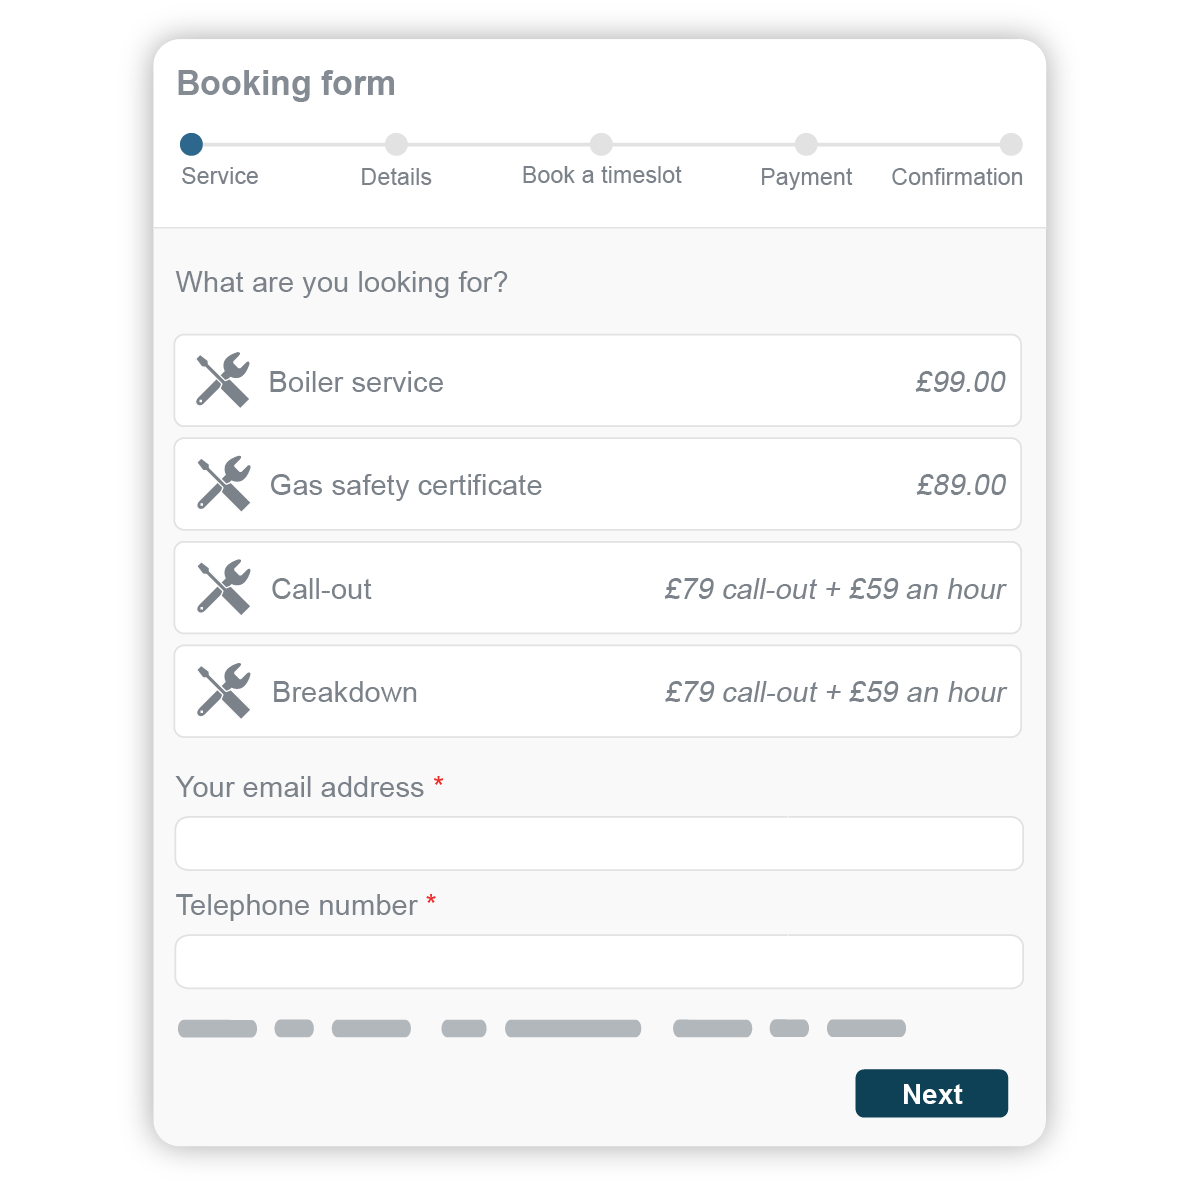 Online booking showing job details